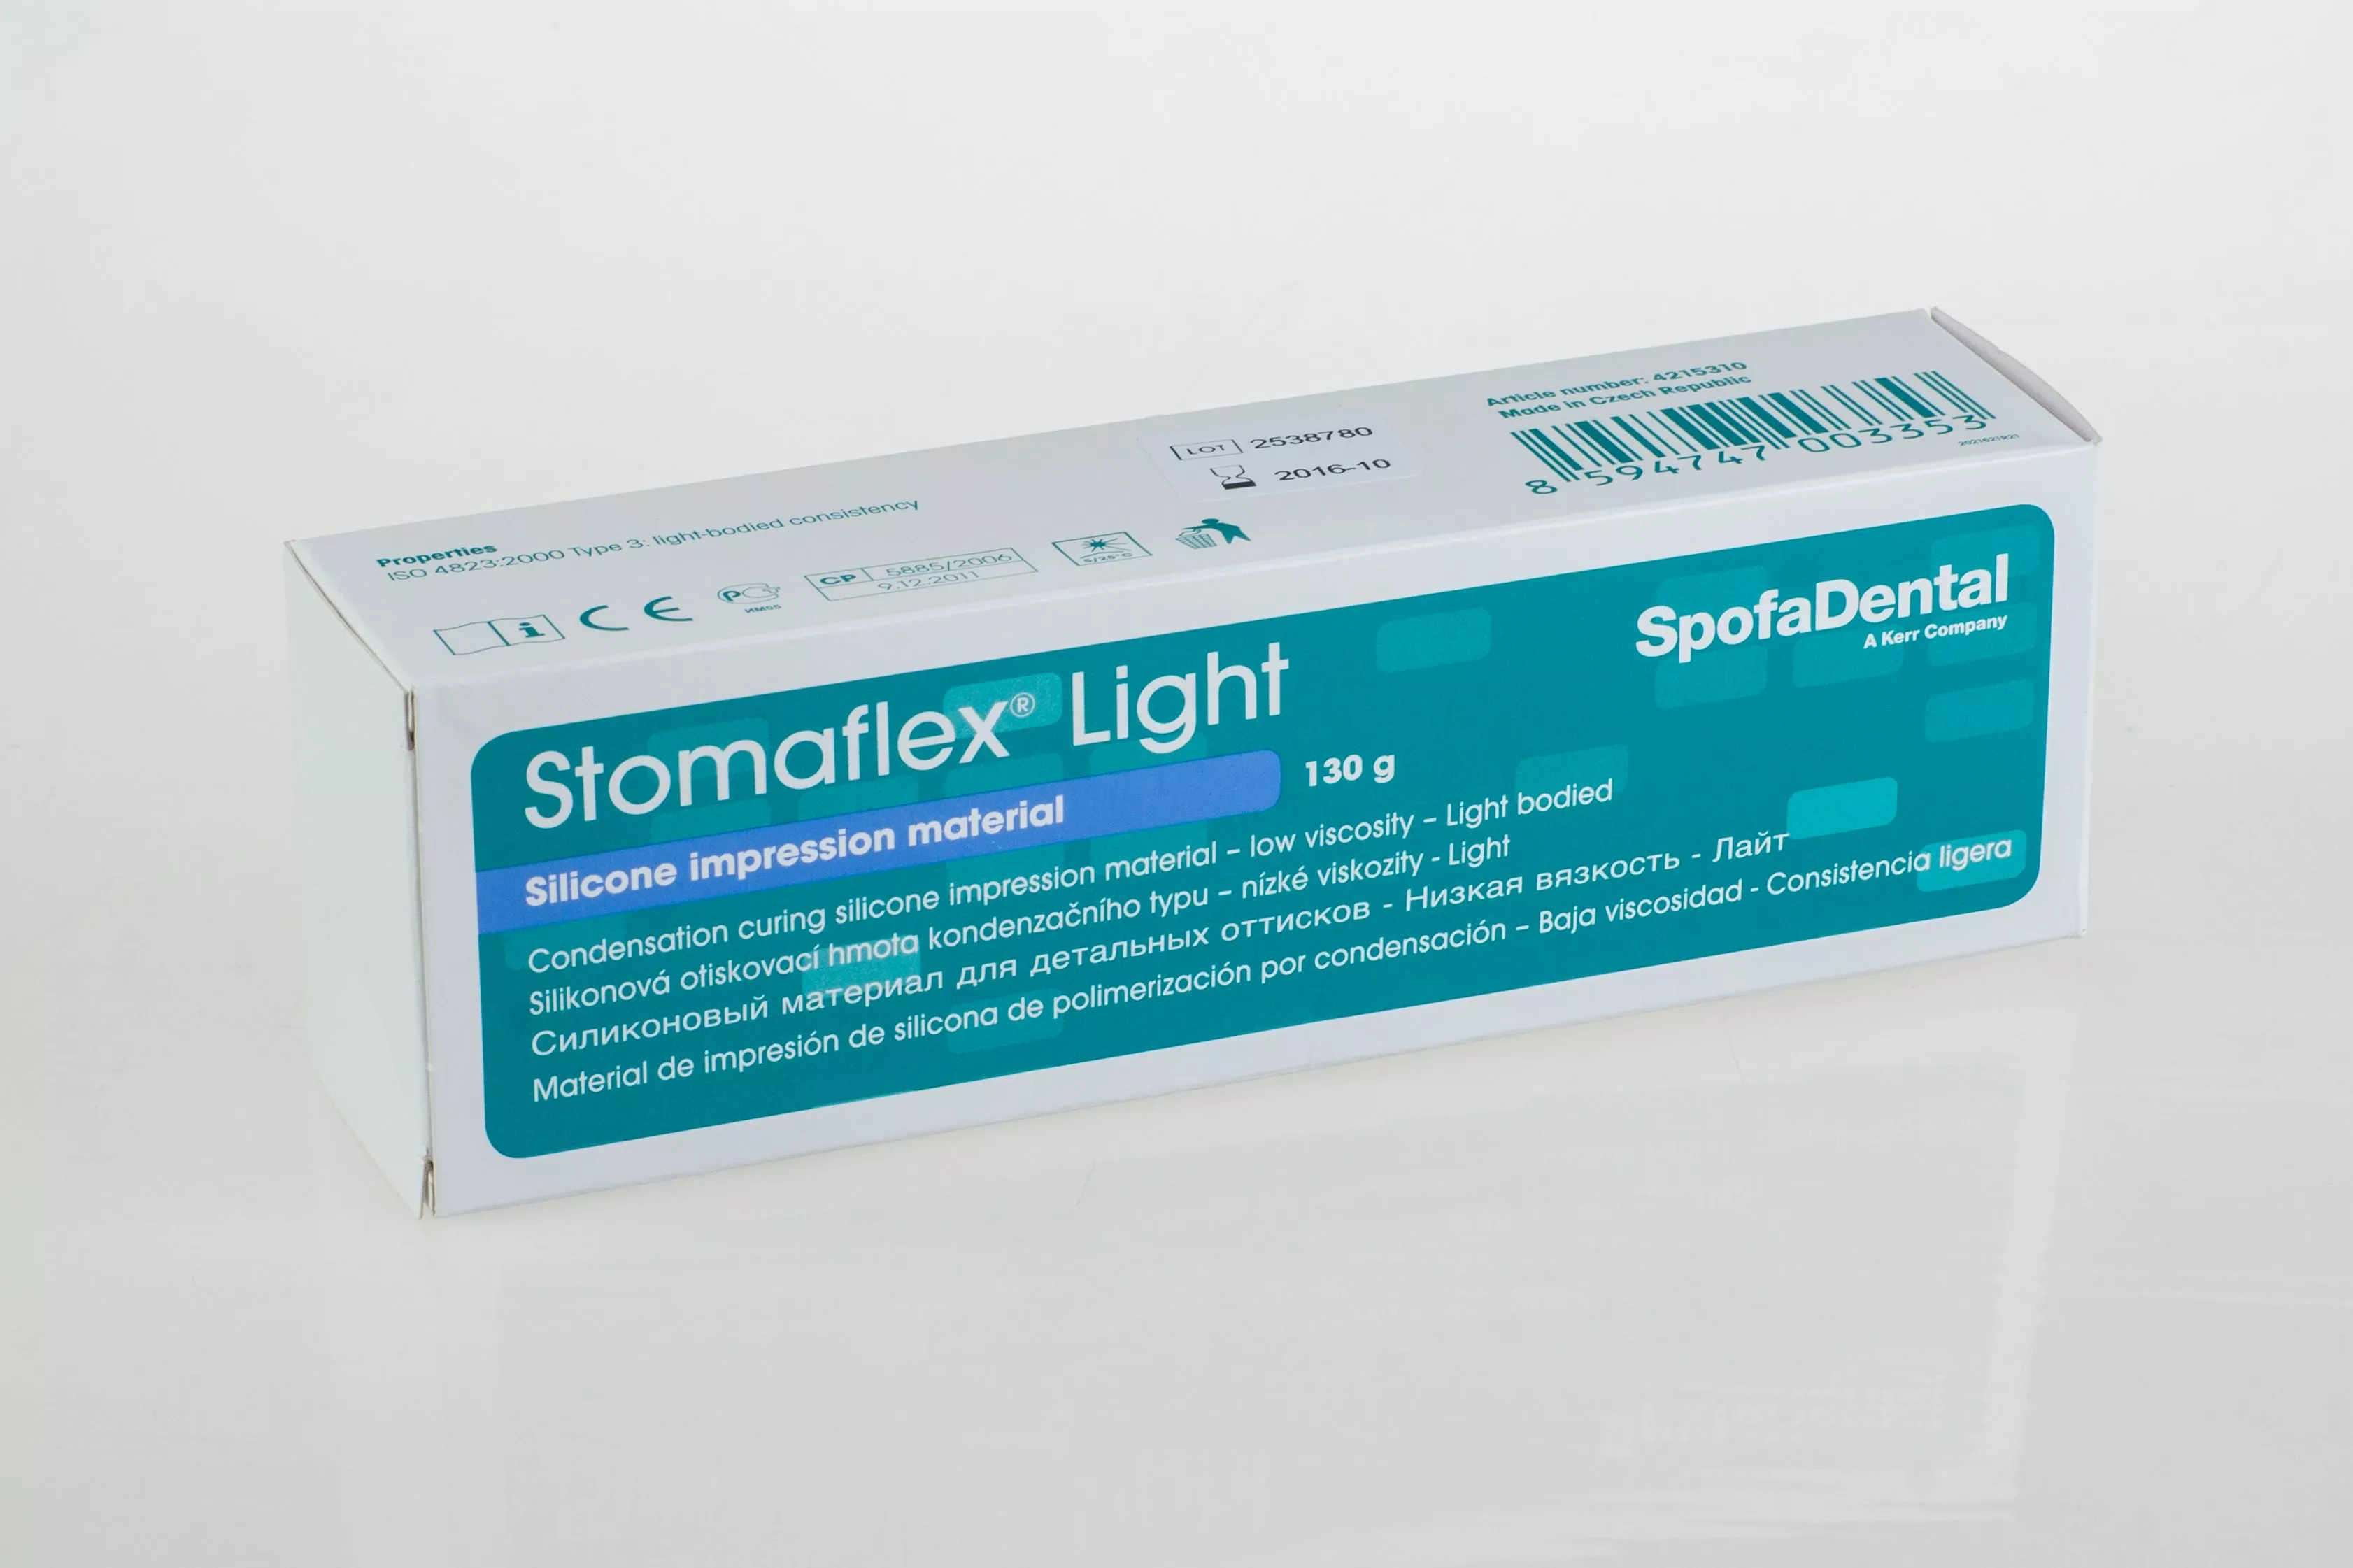 Stomaflex light